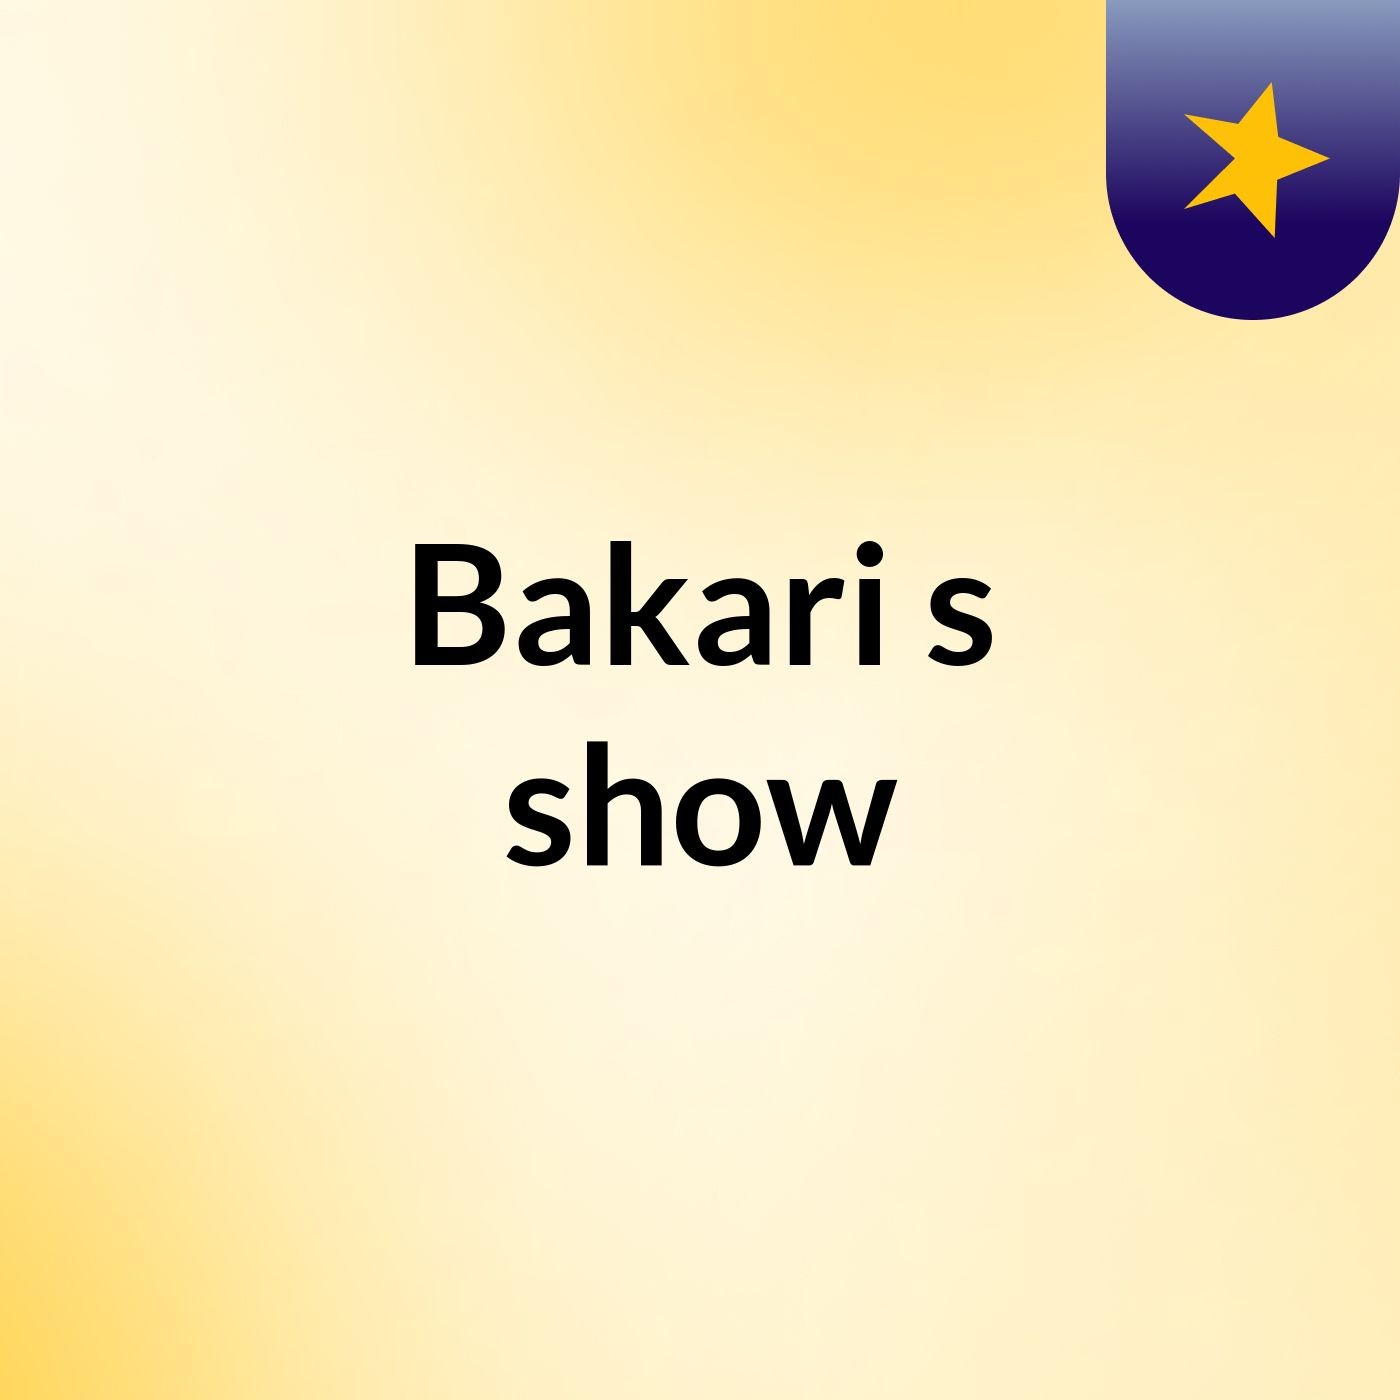 Bakari's show